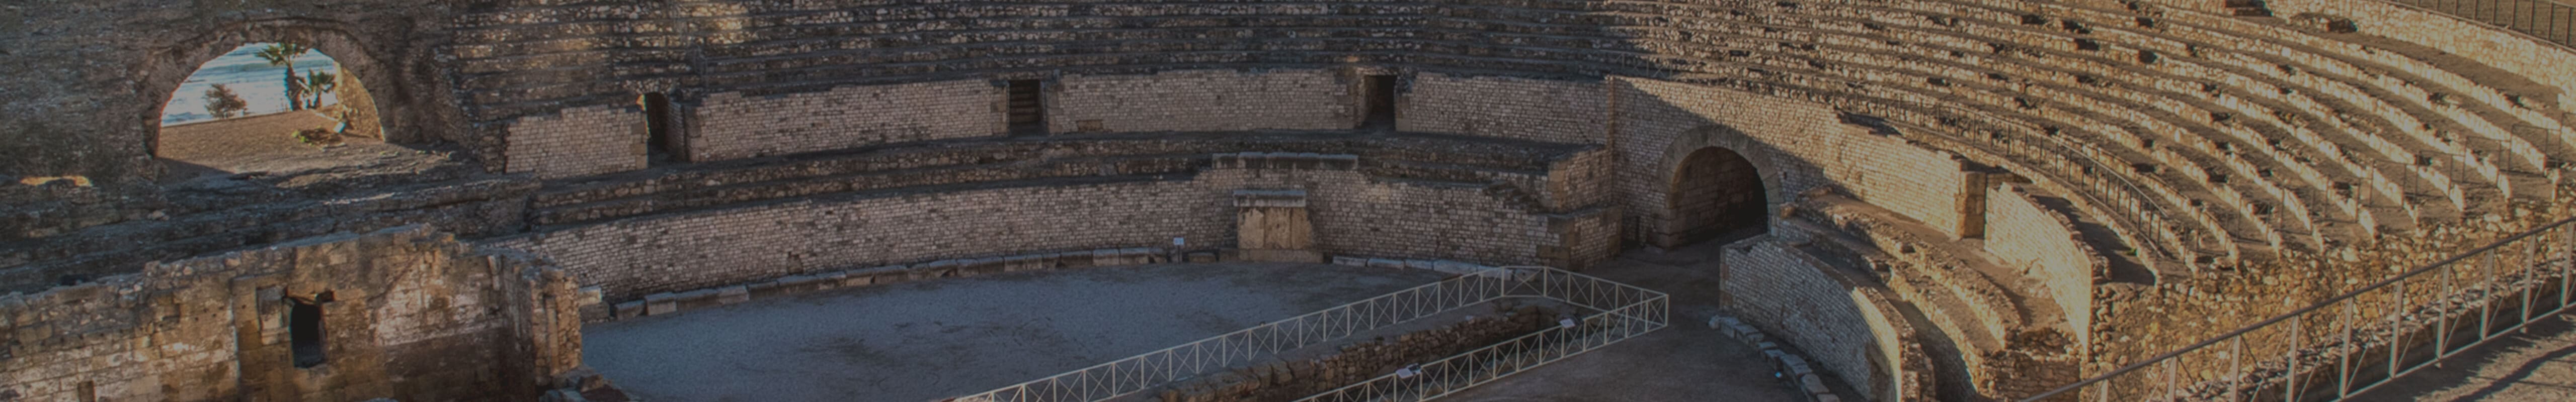 Les fans SEAT ont choisi Tarraco – ruines romaines